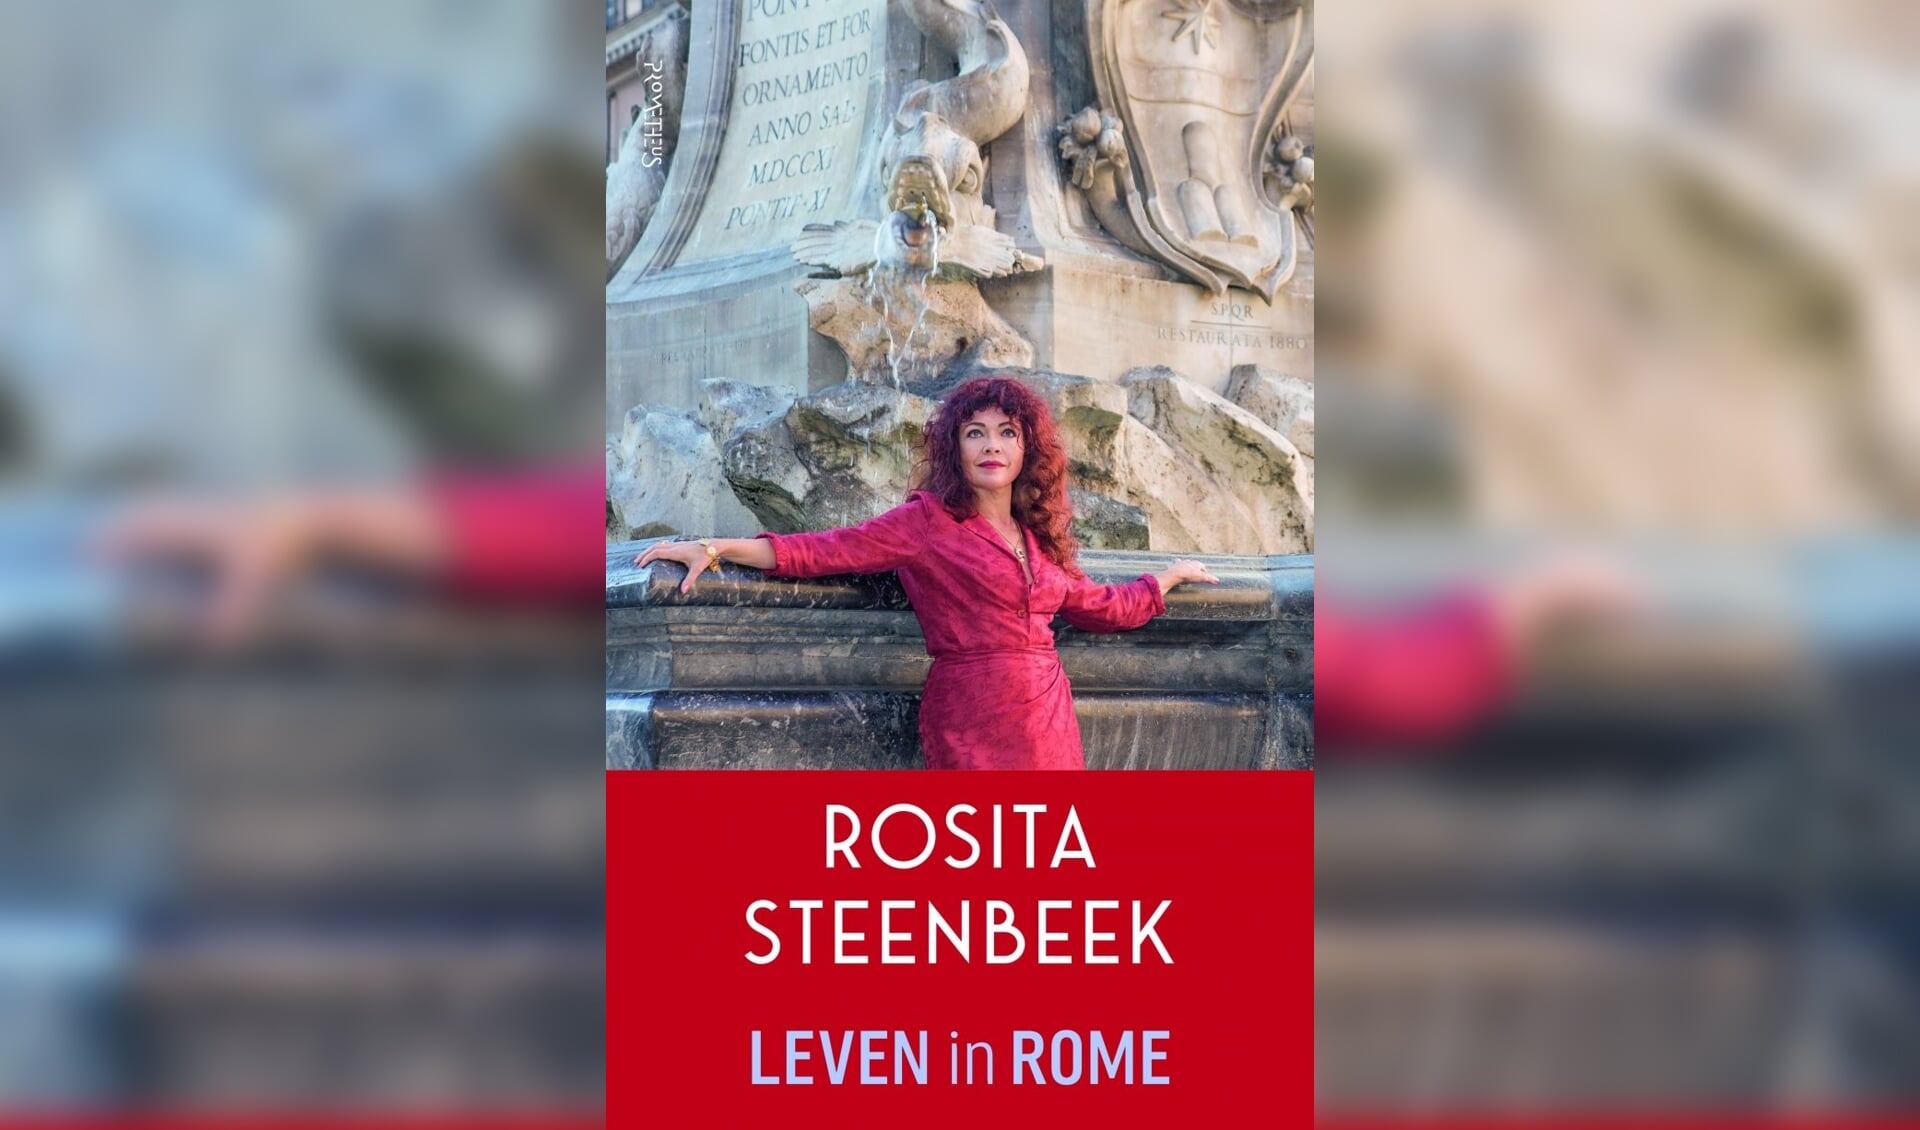 Rosita Steenbeek. 